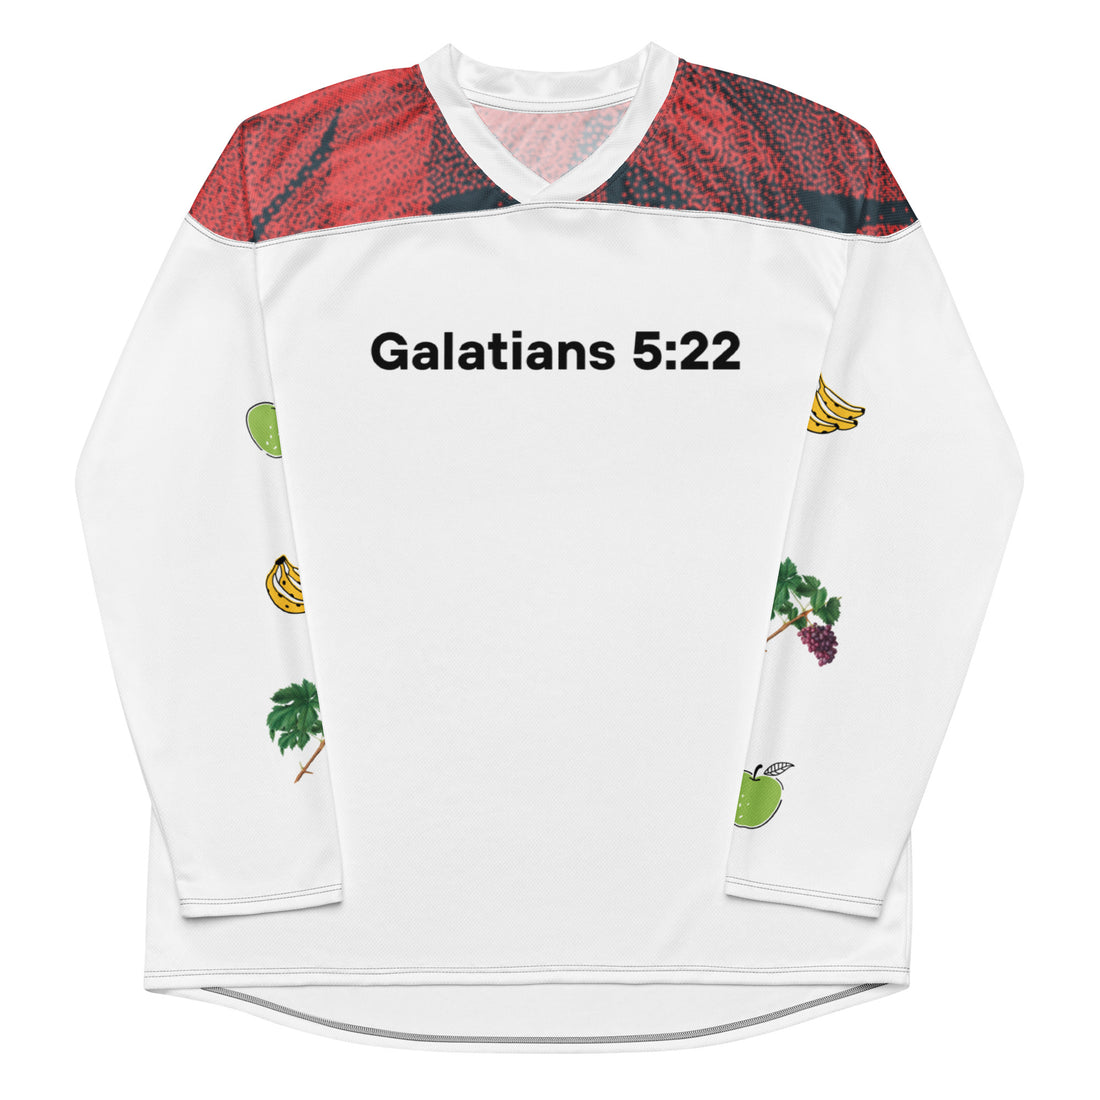 Galatians 5:22 hockeyjersey